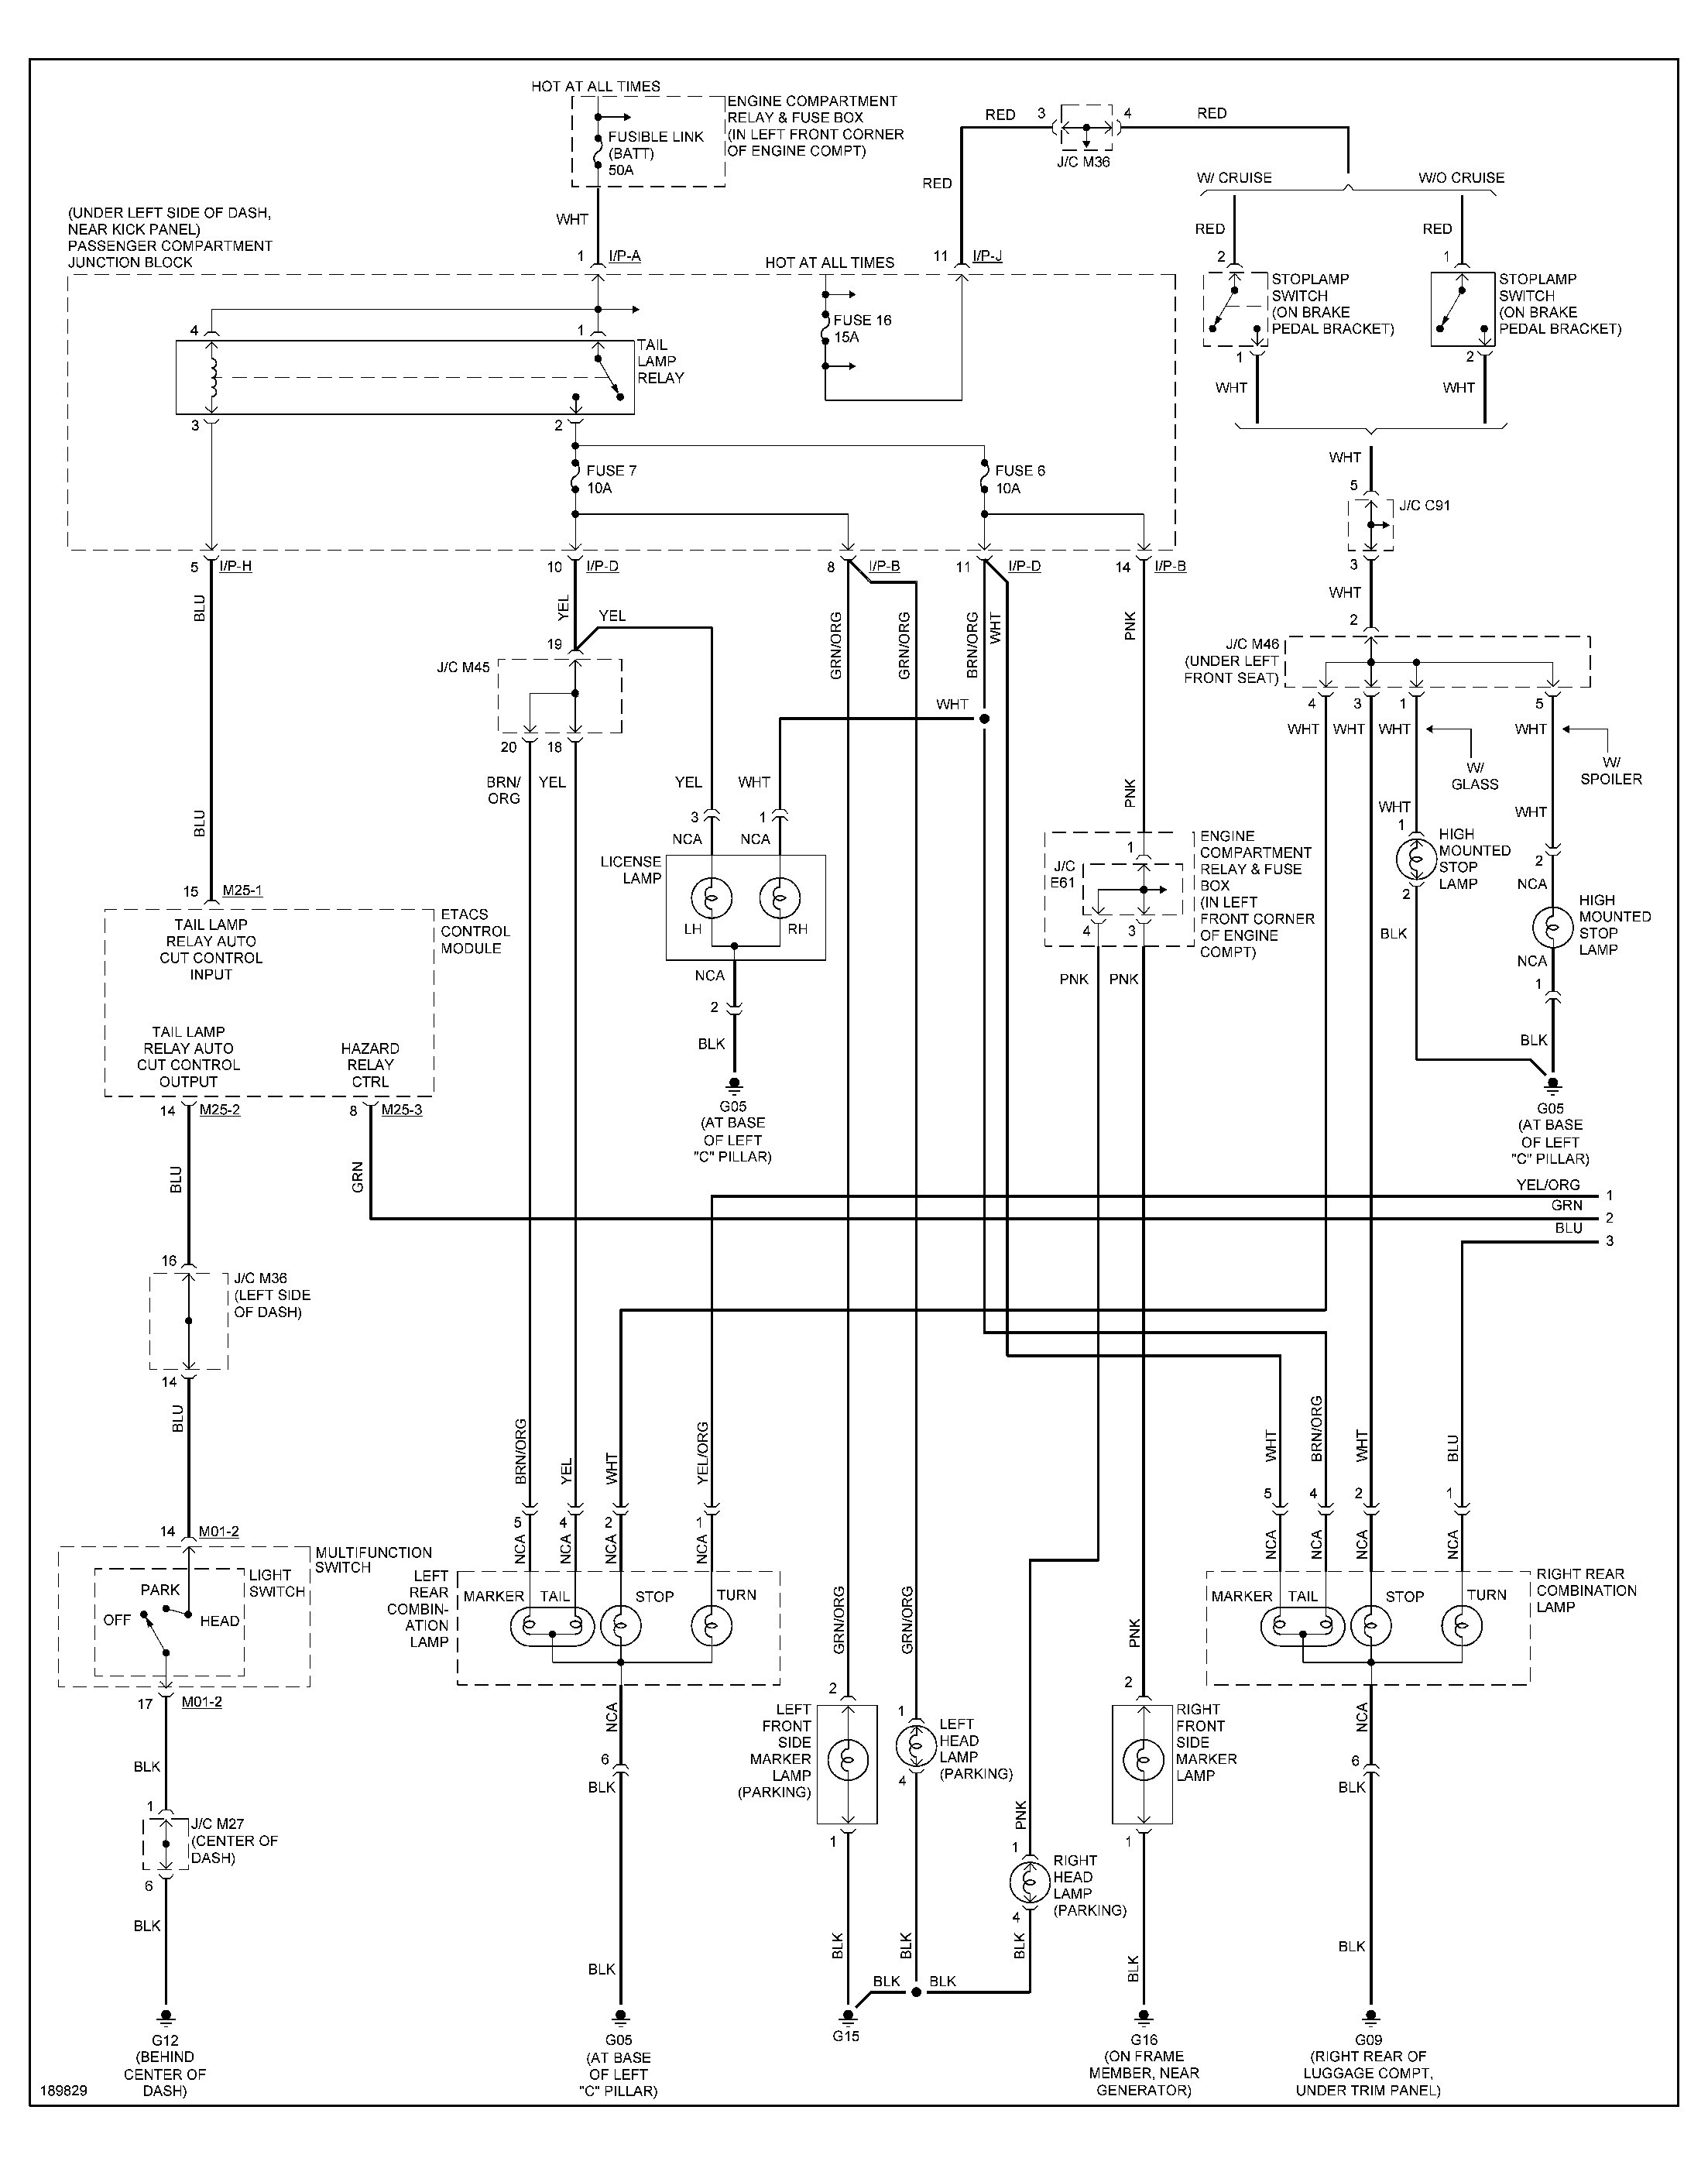 Hyundai Sonata Stereo Wiring Diagram from detoxicrecenze.com